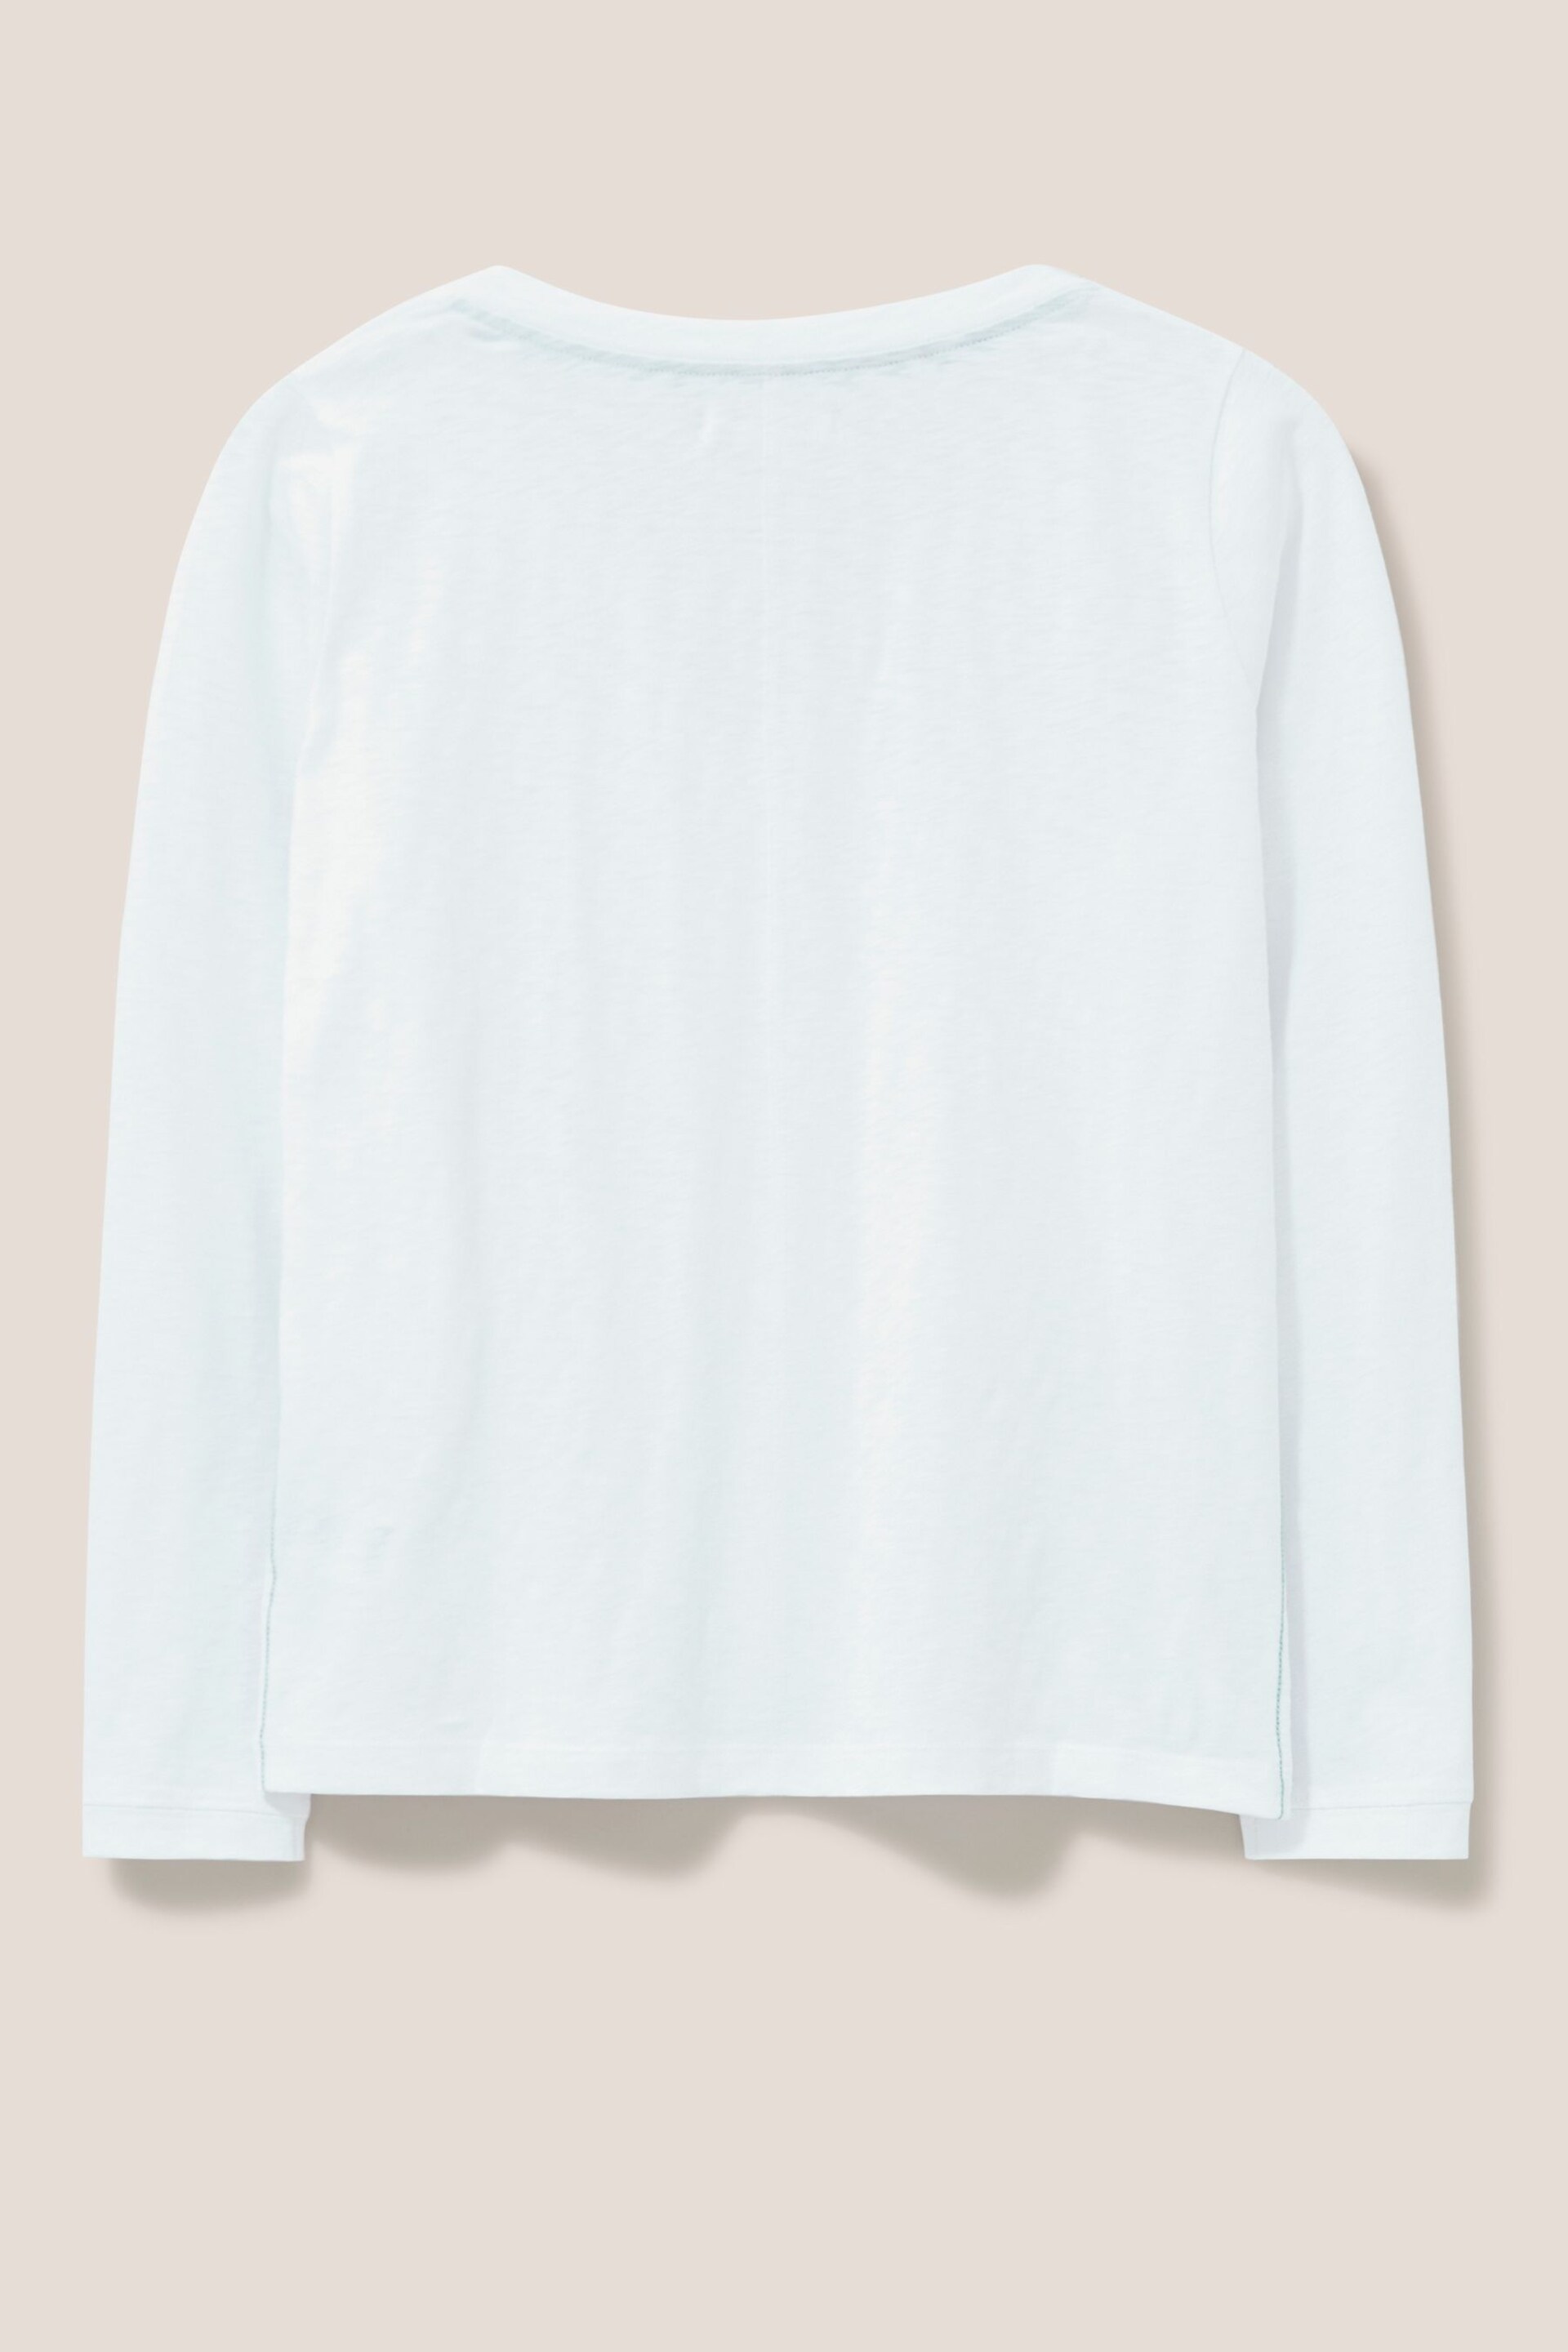 White Stuff White Long Sleeve Nelly T-Shirt - Image 6 of 6